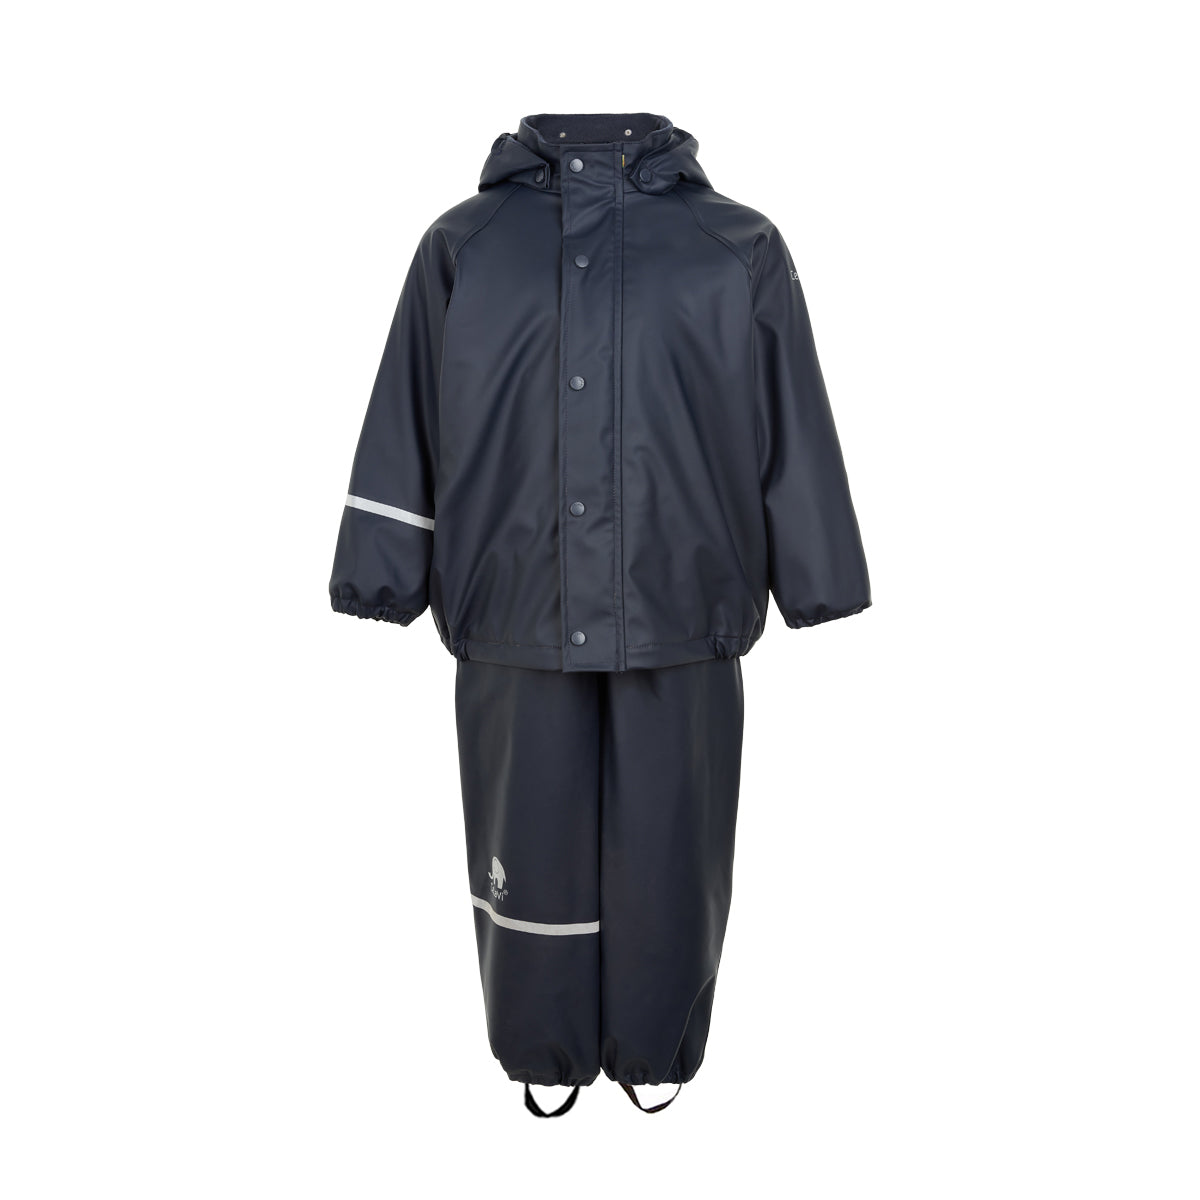 Rainwear suitable for ages 5-9 – PuddleDucks